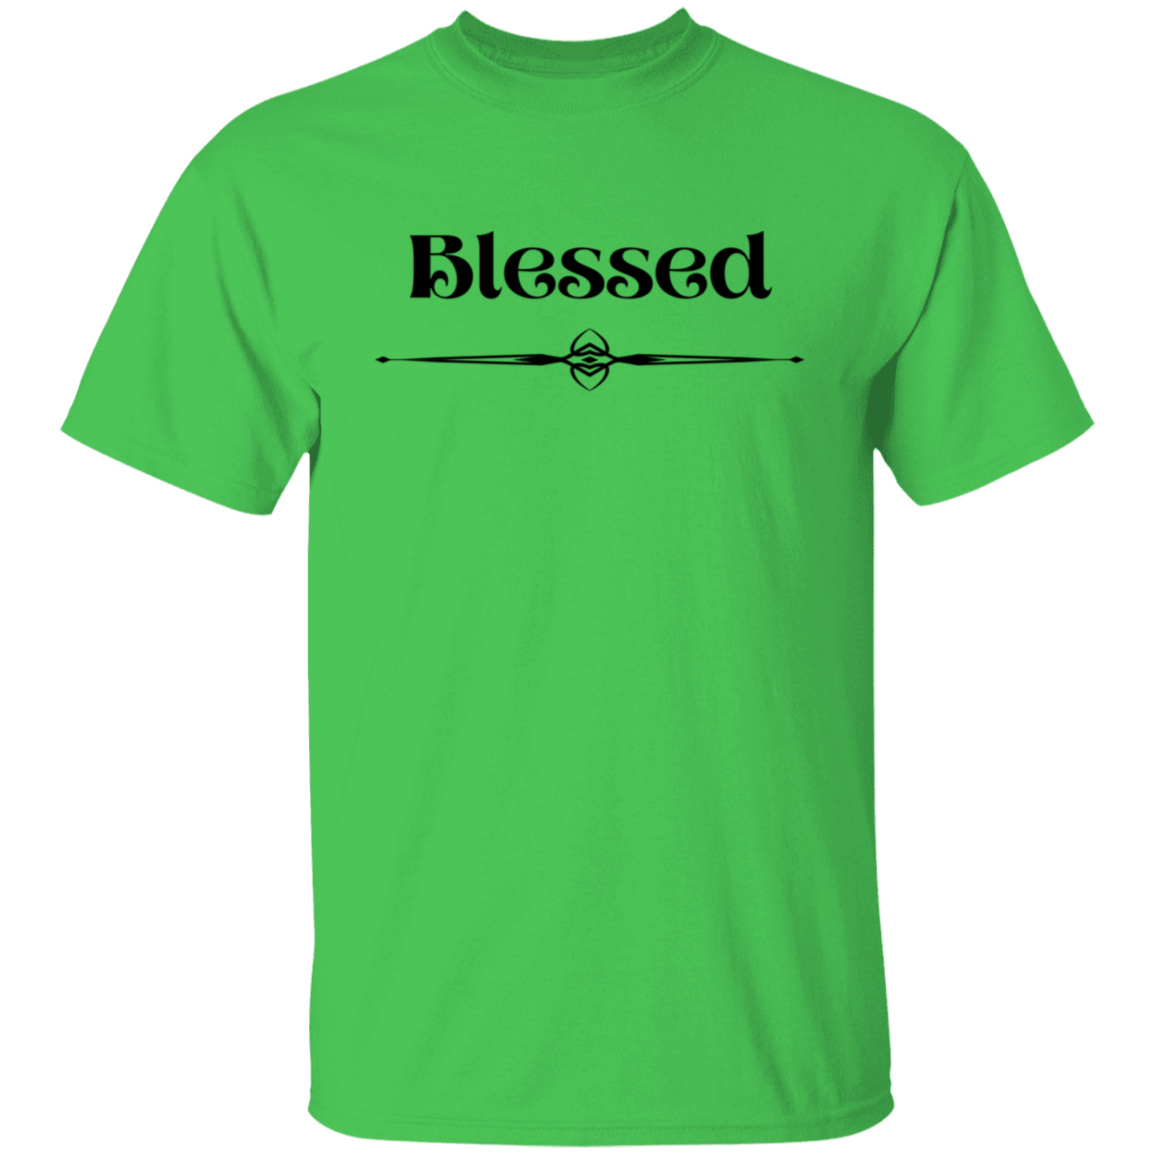 Blessed TShirt - UNISEX